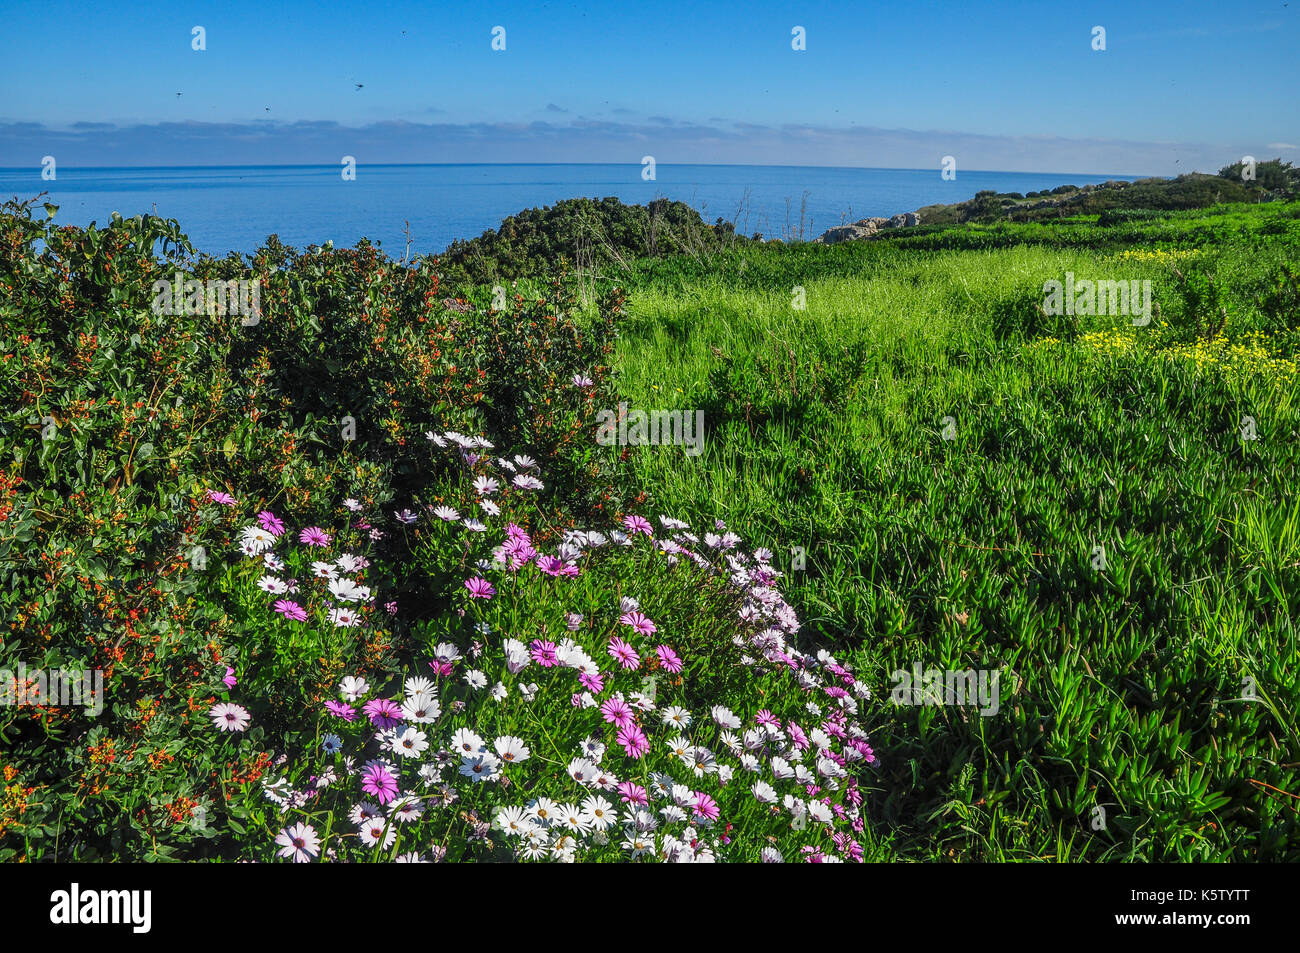 French culture Corsica Islands landscape Stock Photo